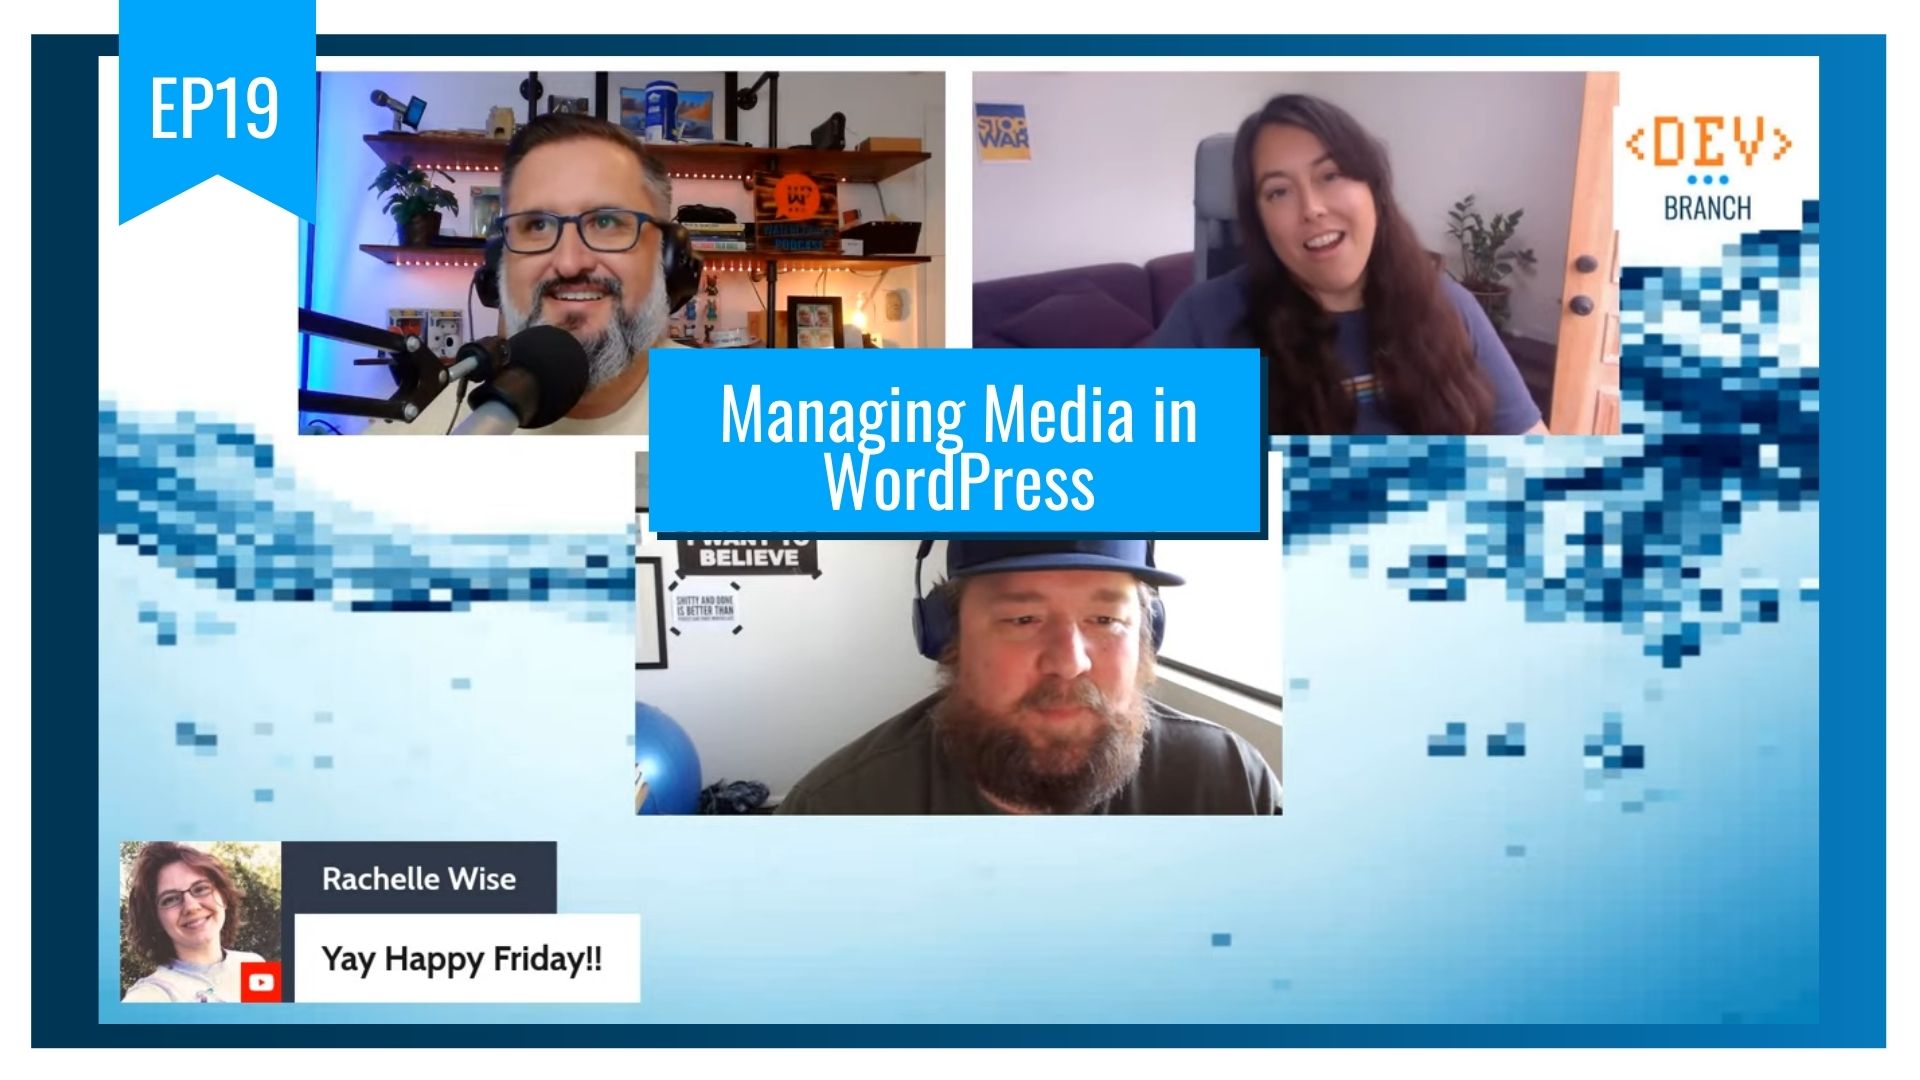 EP19 – Managing Media in WordPress